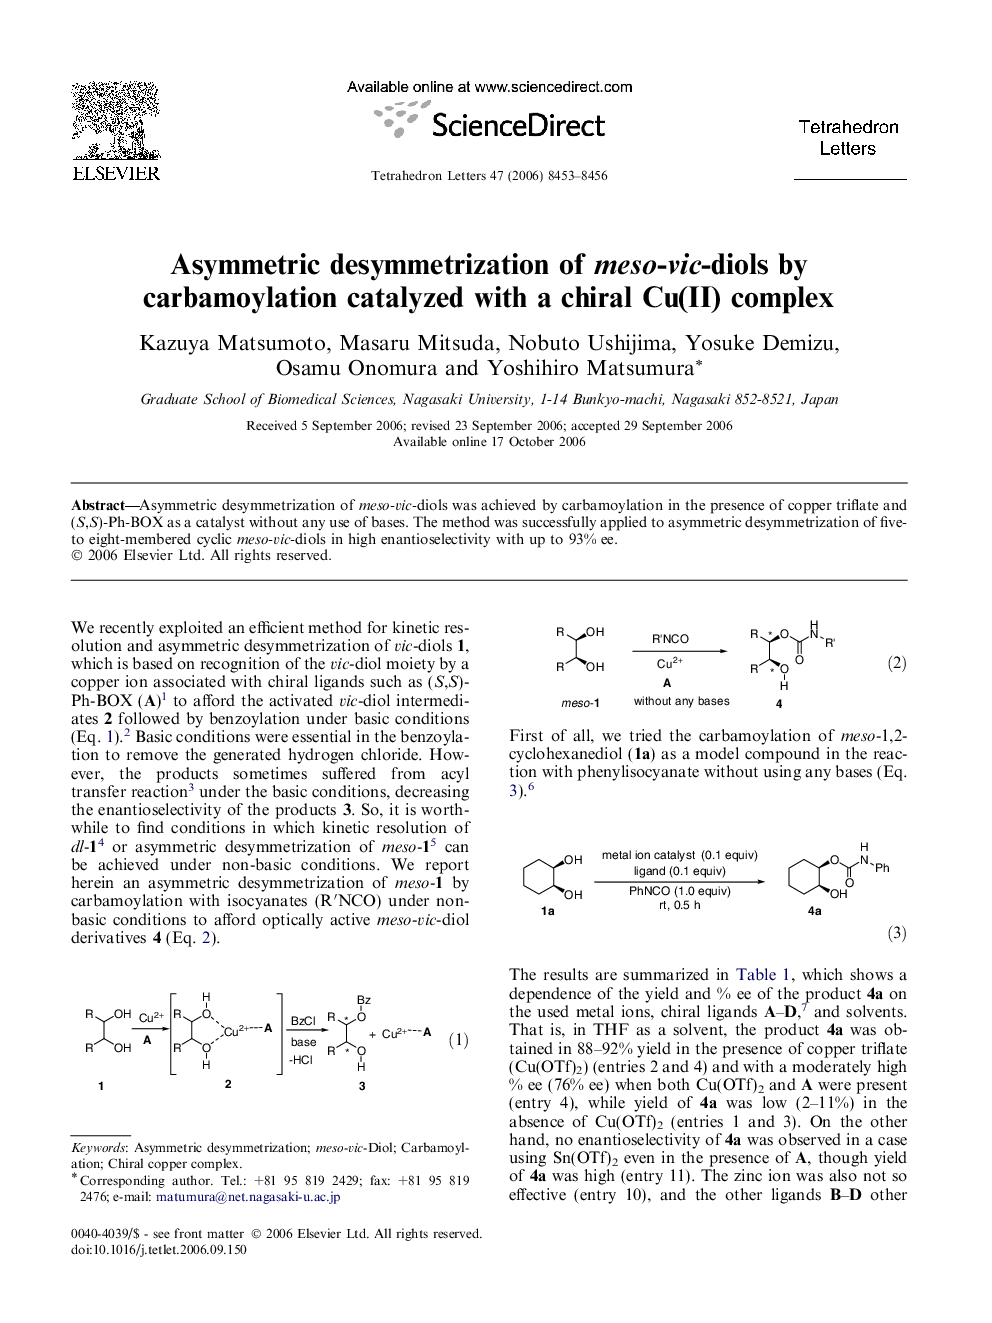 Asymmetric desymmetrization of meso-vic-diols by carbamoylation catalyzed with a chiral Cu(II) complex